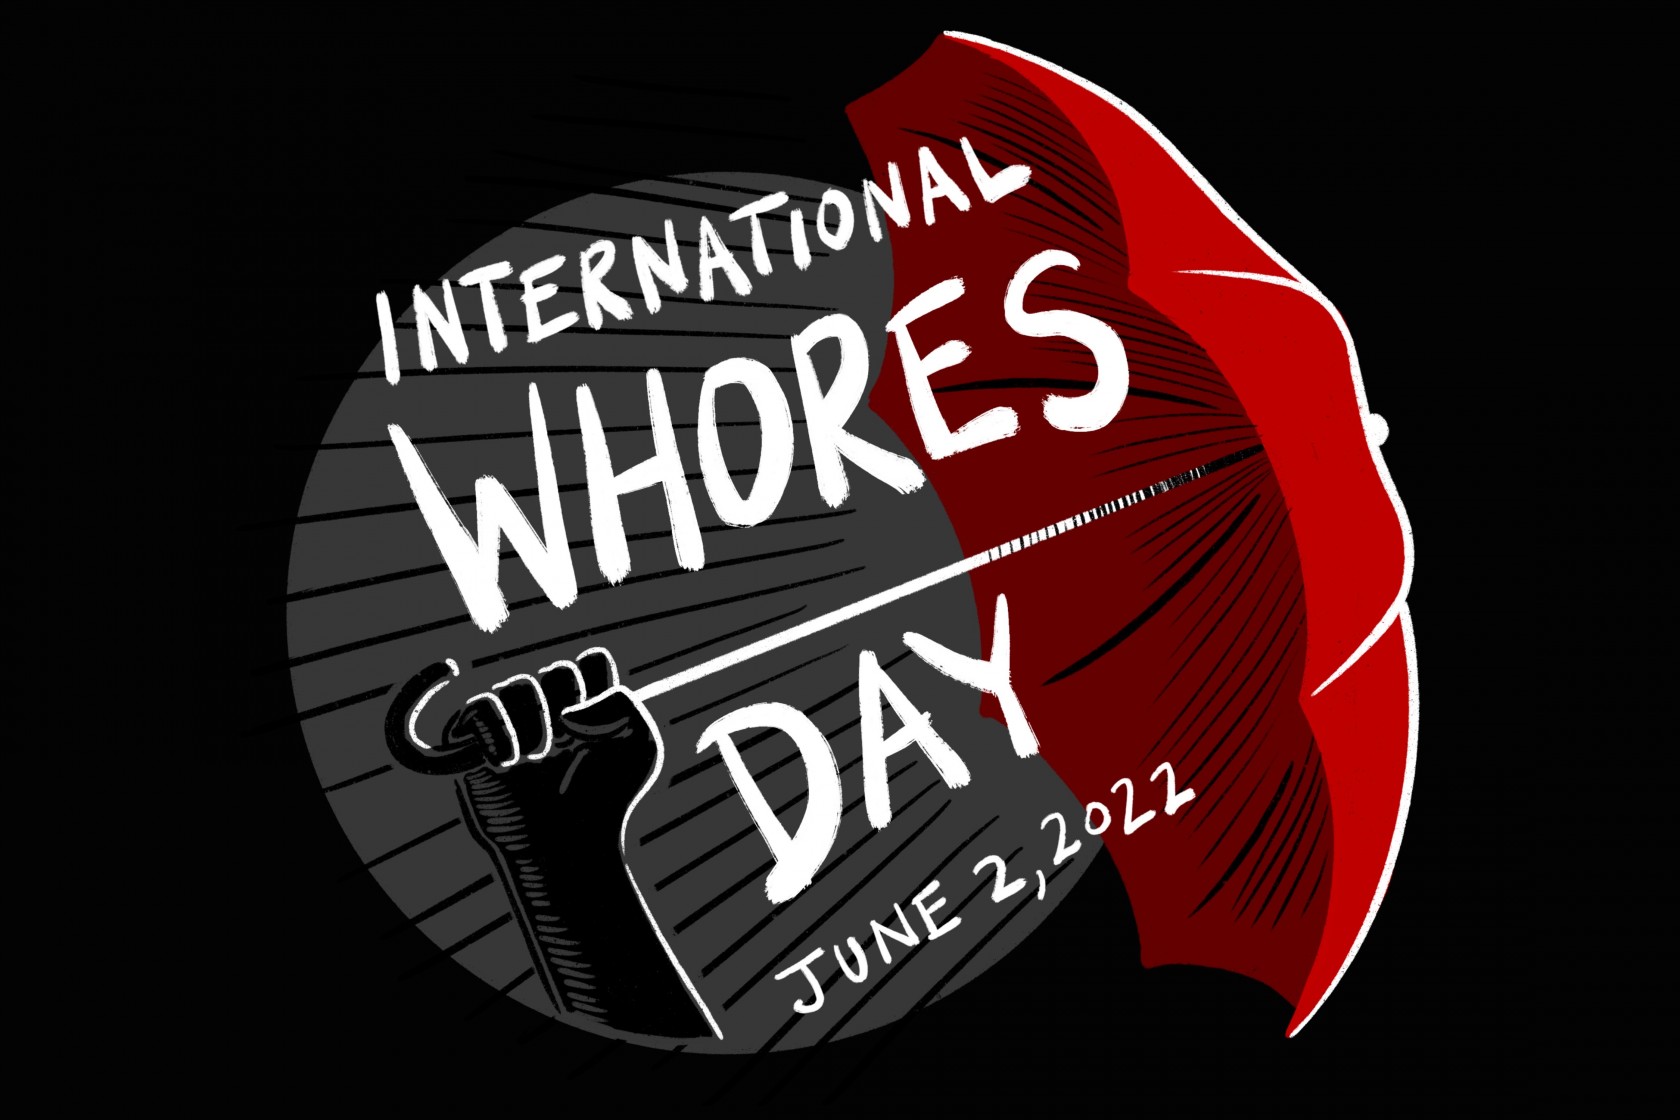 International Whores’ Day 2022. Design by kd diamond.